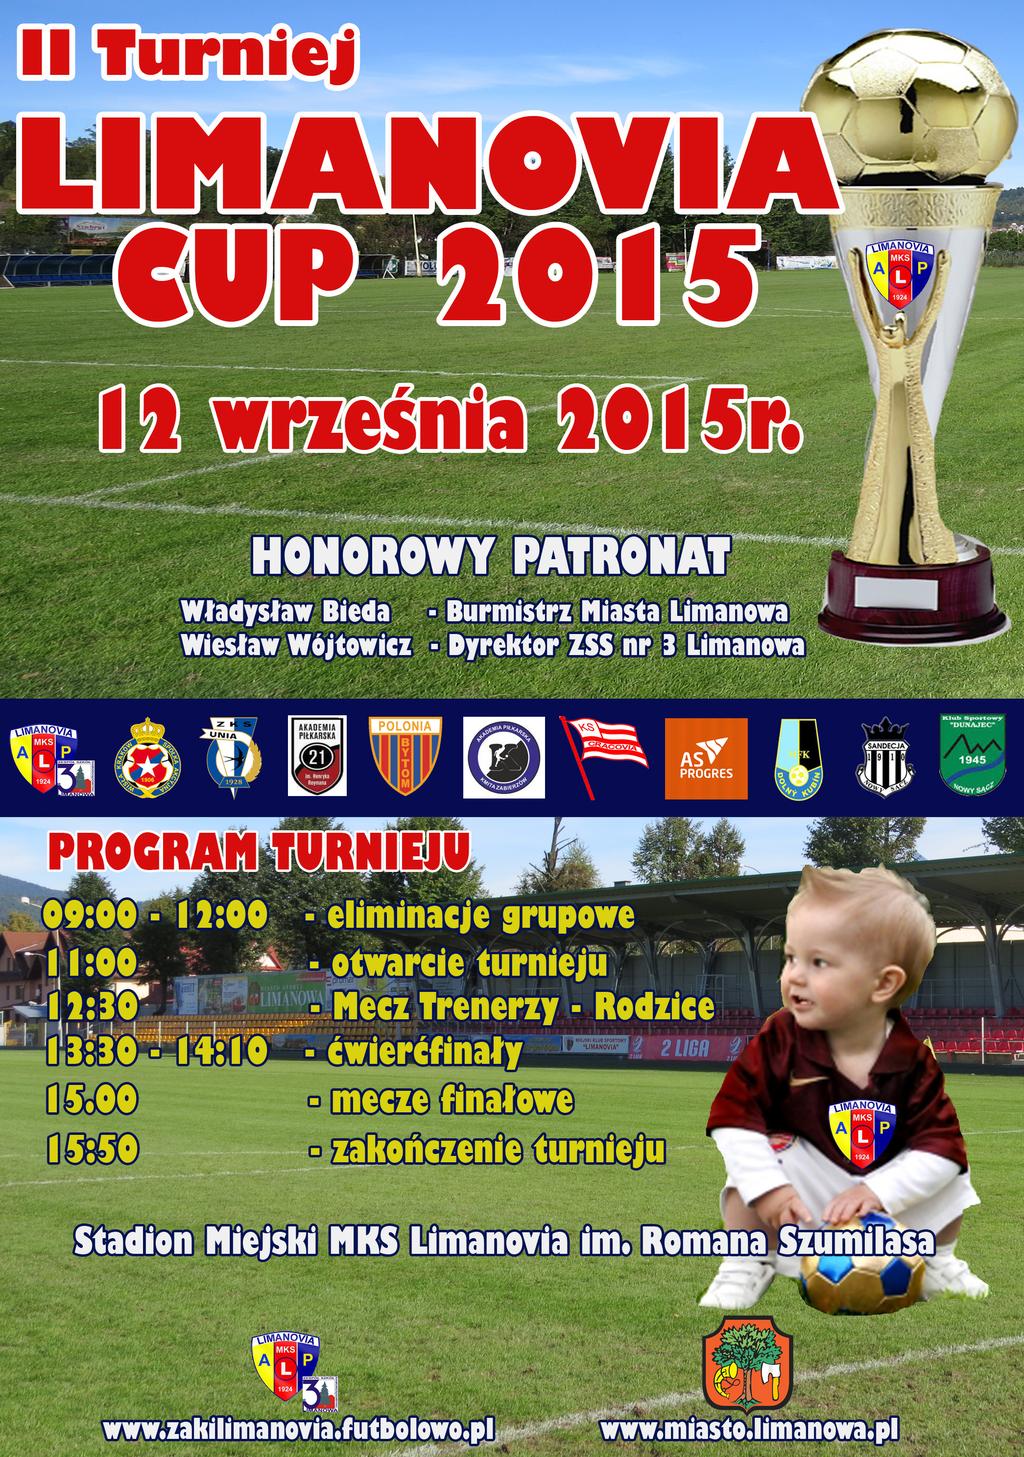 II Turniej piłkarski LIMANOVIA ŻAK CUP 2015 O